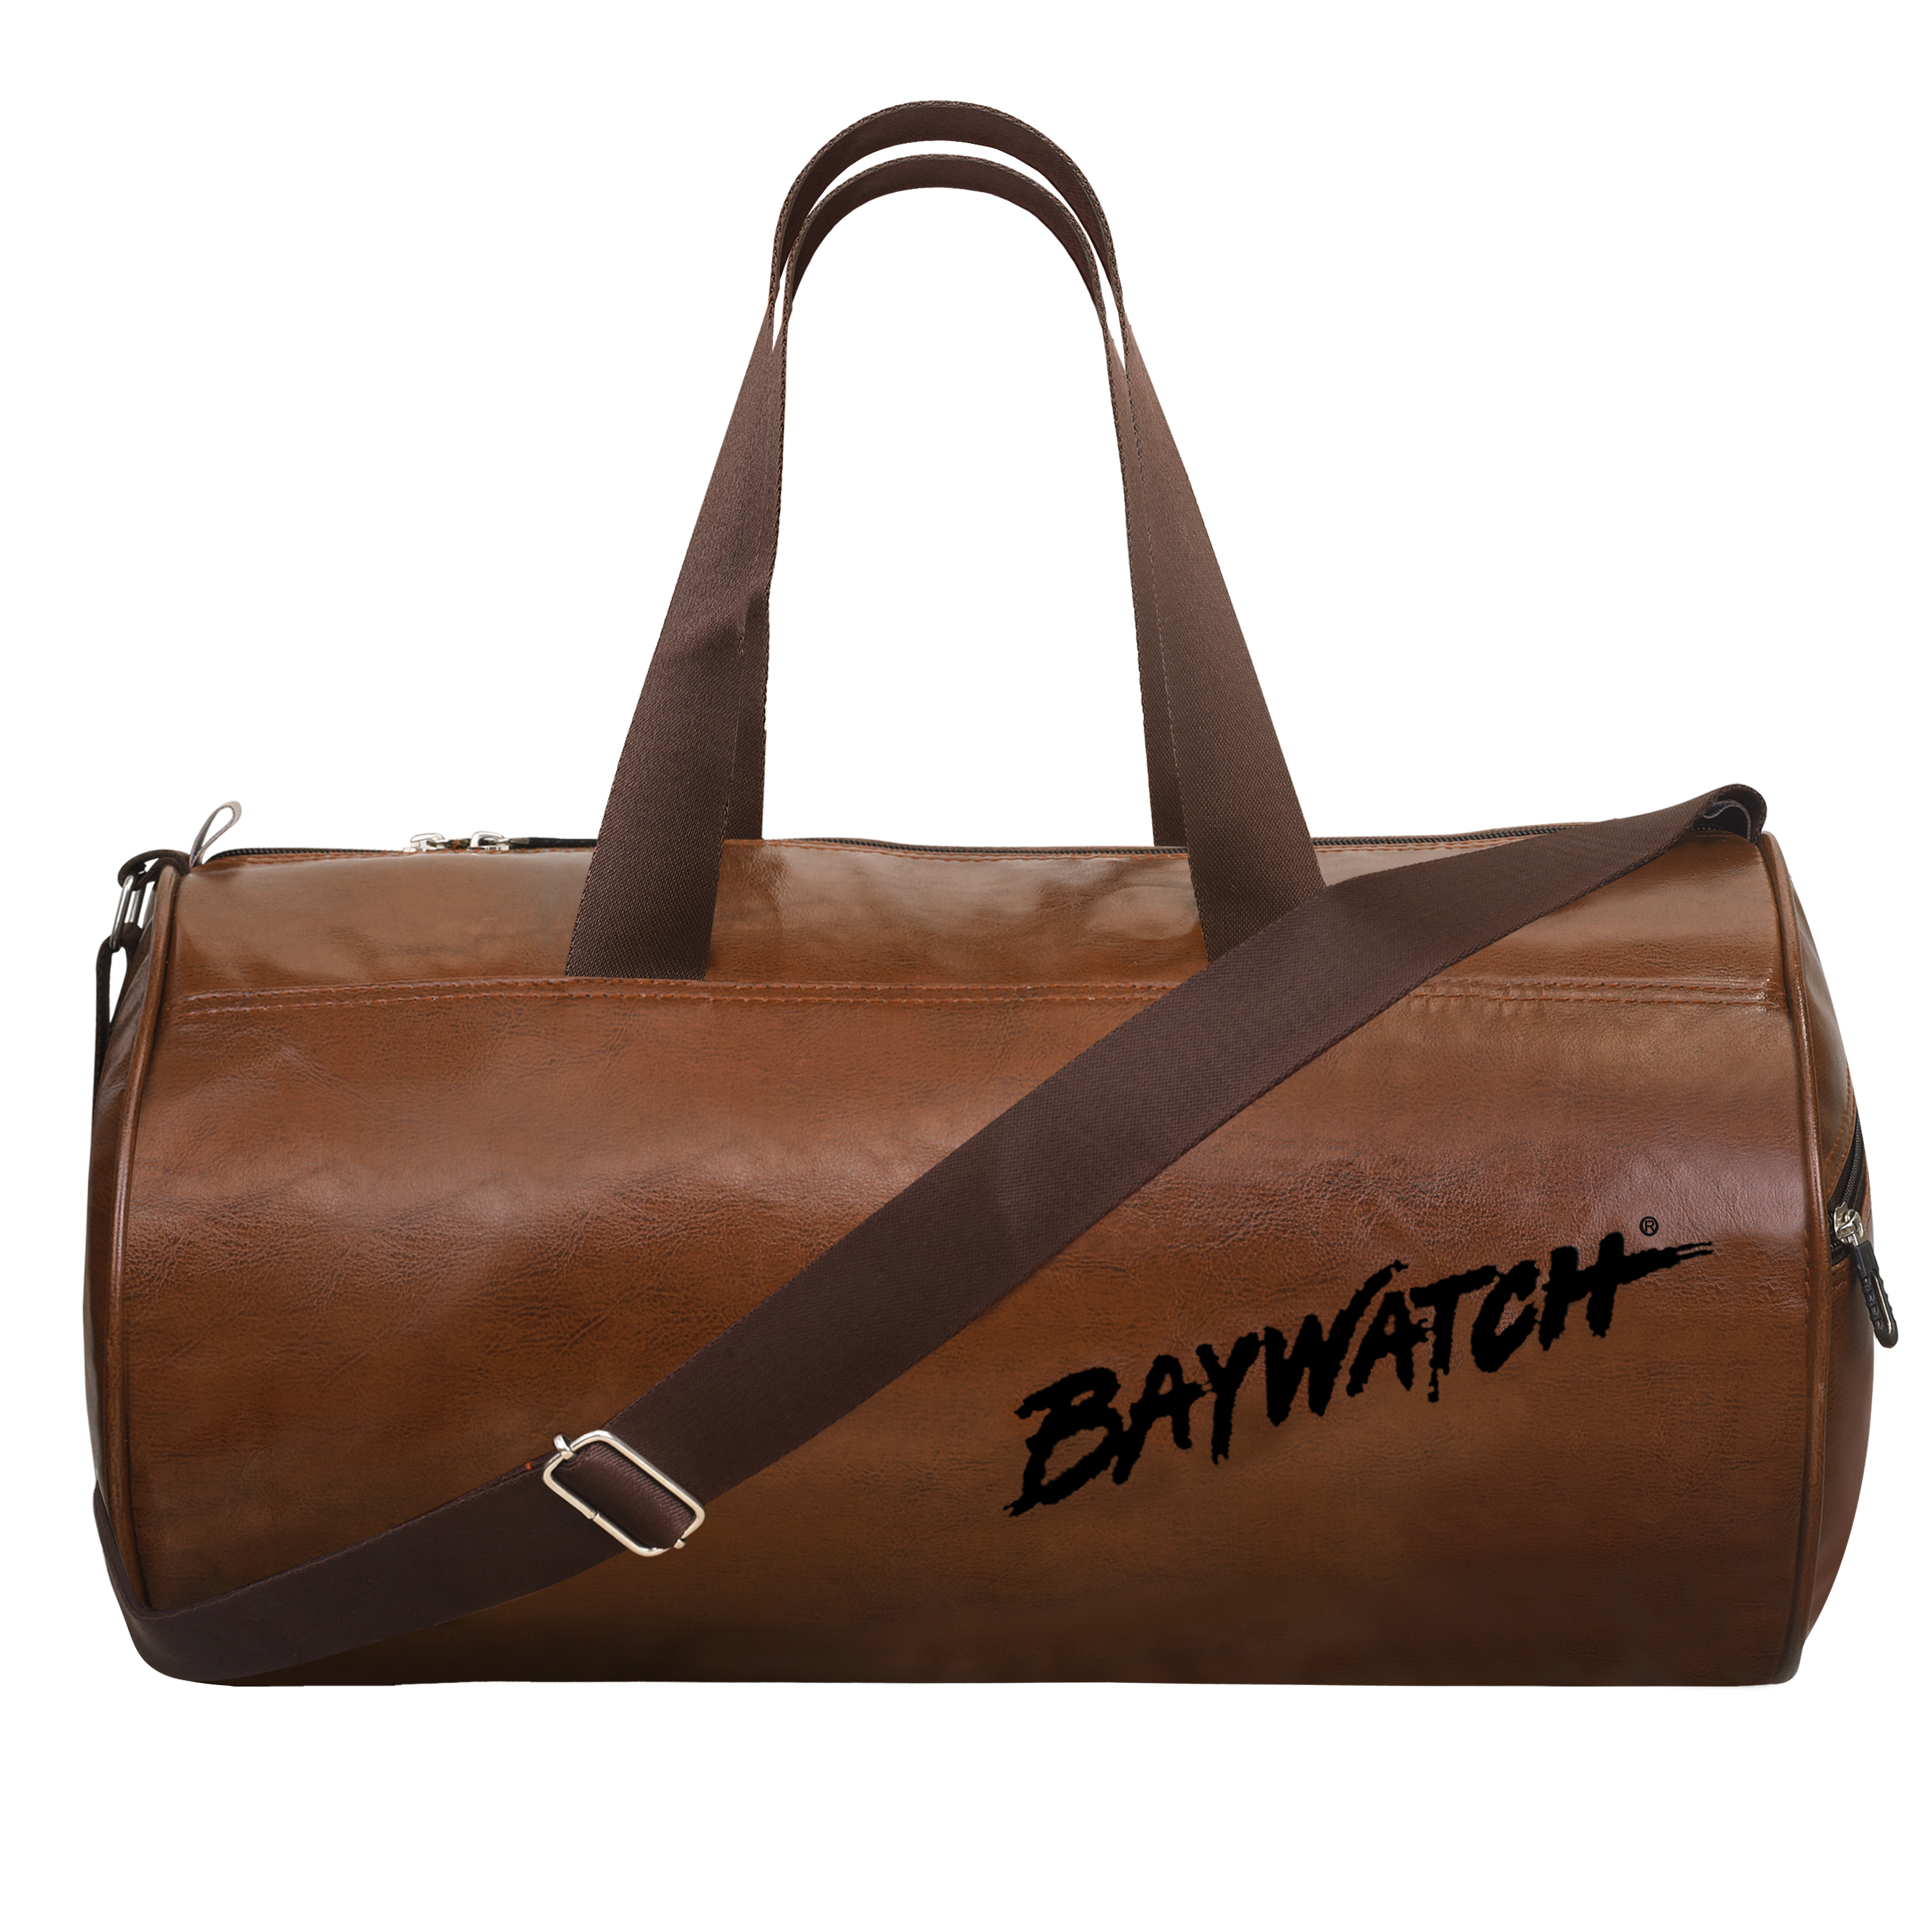 Baywatch Unisex Casual PU Leather Gym Duffle Bag ll Gym Bag for Men   Brown